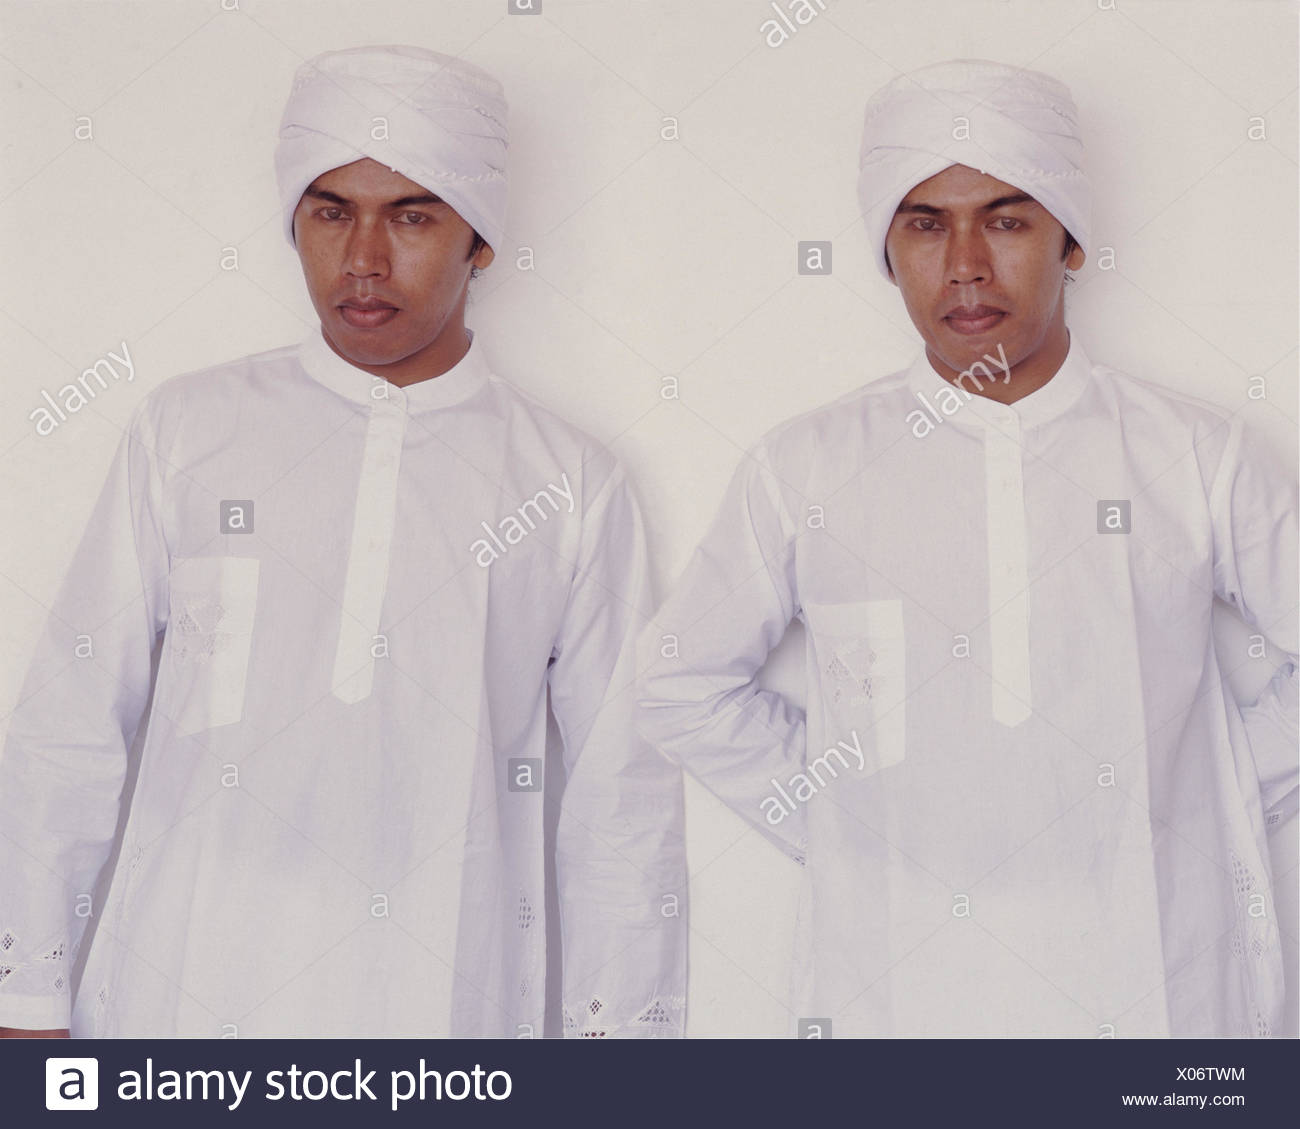 Männer islam kopfbedeckungen Religiöse Kopfbedeckungen